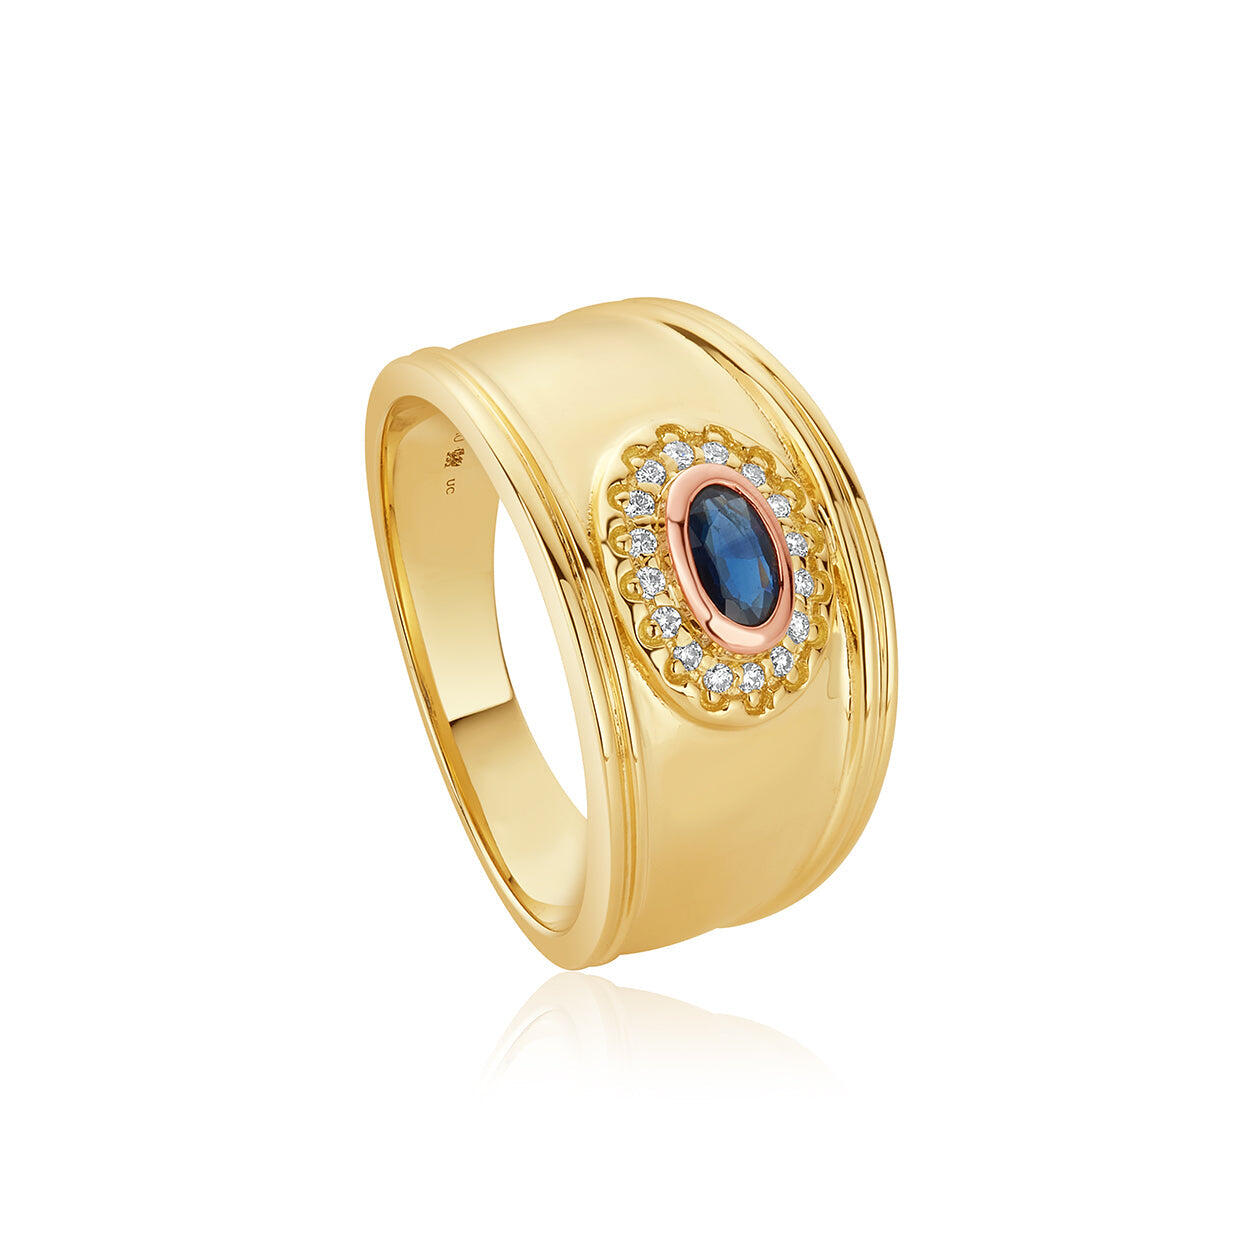 Clogau Princess Diana Sapphire Diamond 9ct Gold Ring - M